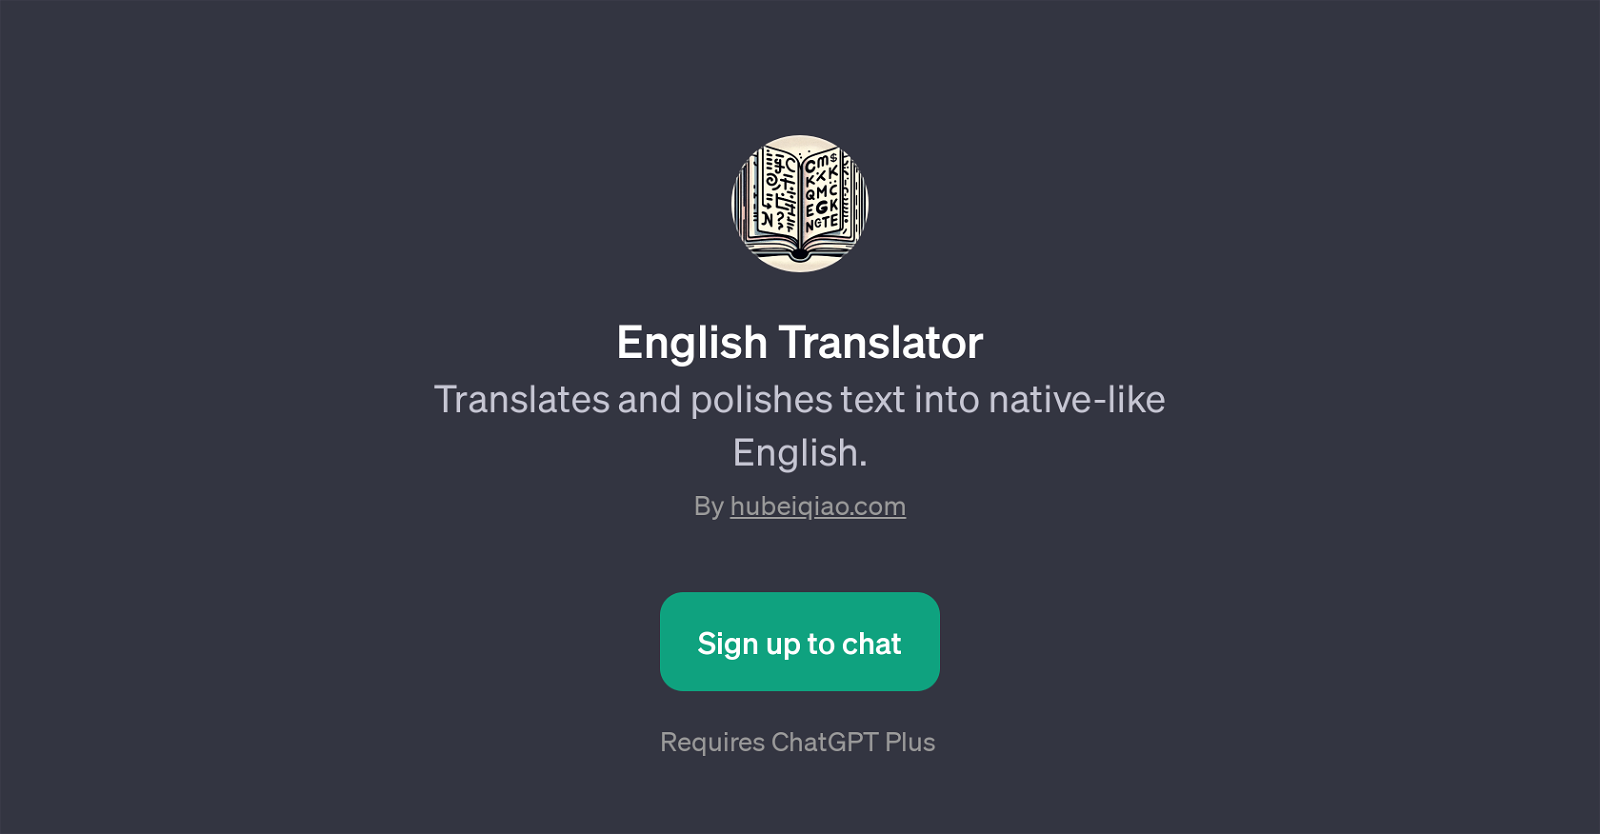 English Translator website